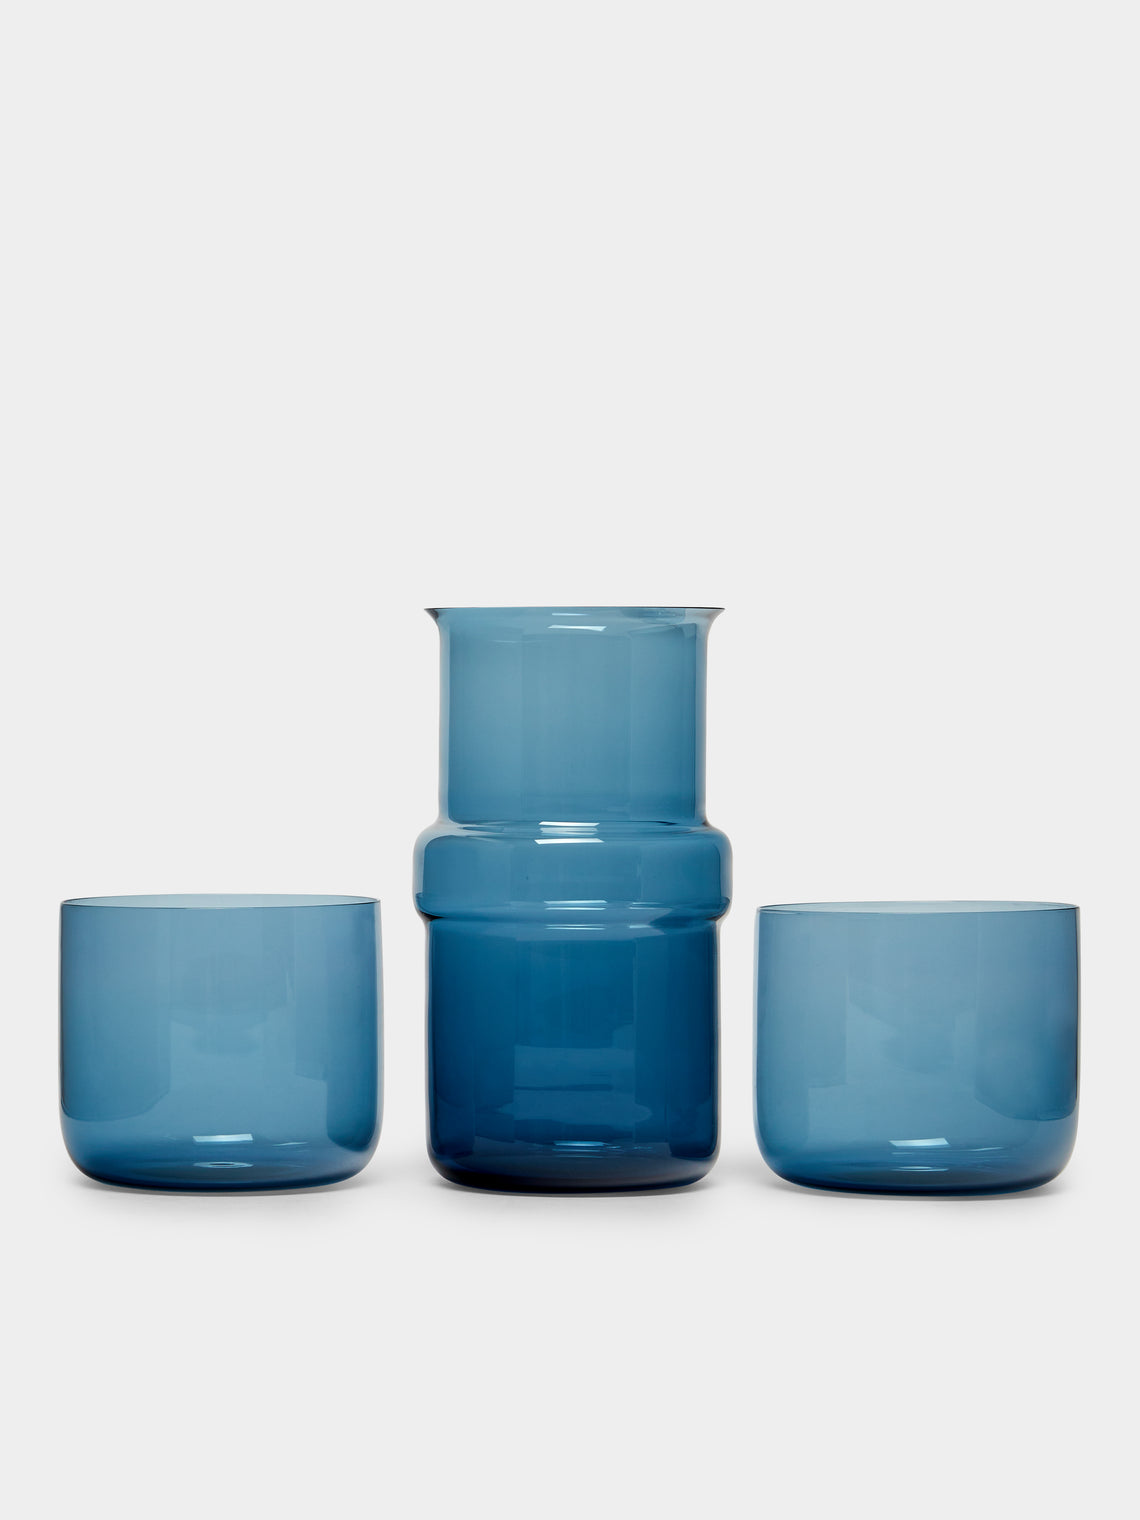 NasonMoretti - Hand-Blown Murano Glasses and Carafe (Set of 3) - Blue - ABASK - 